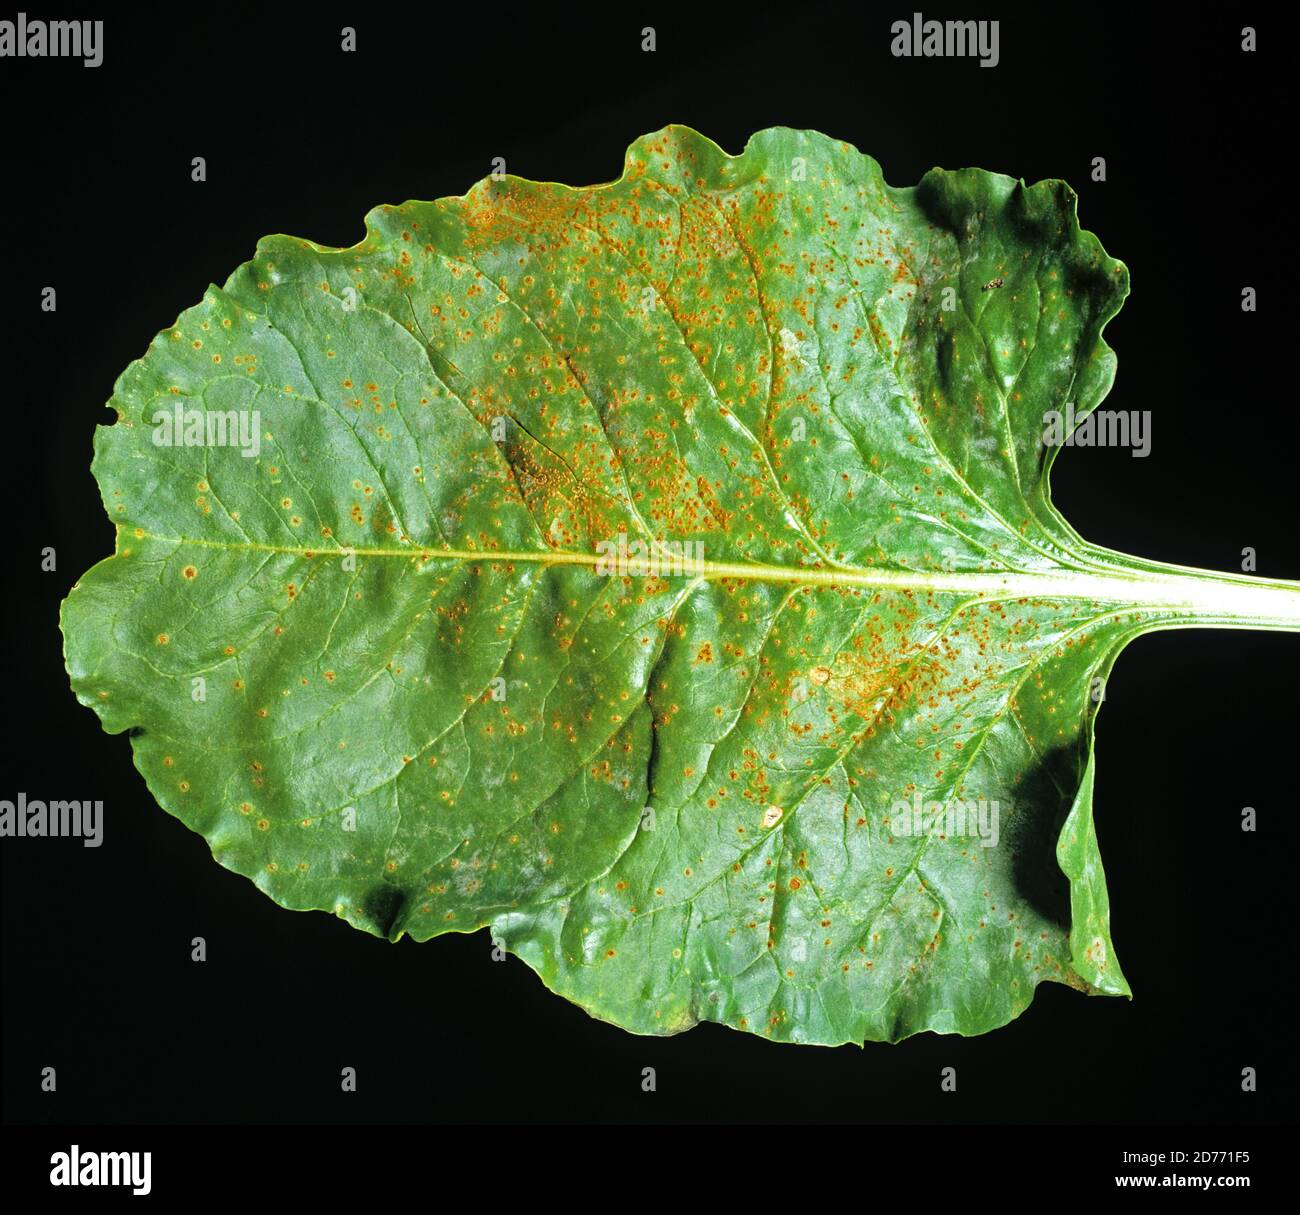 Sugar beet rust (Uromyces beticola) fungal disease pustules on a sugar beet leaf, Champagne Region, France Stock Photo